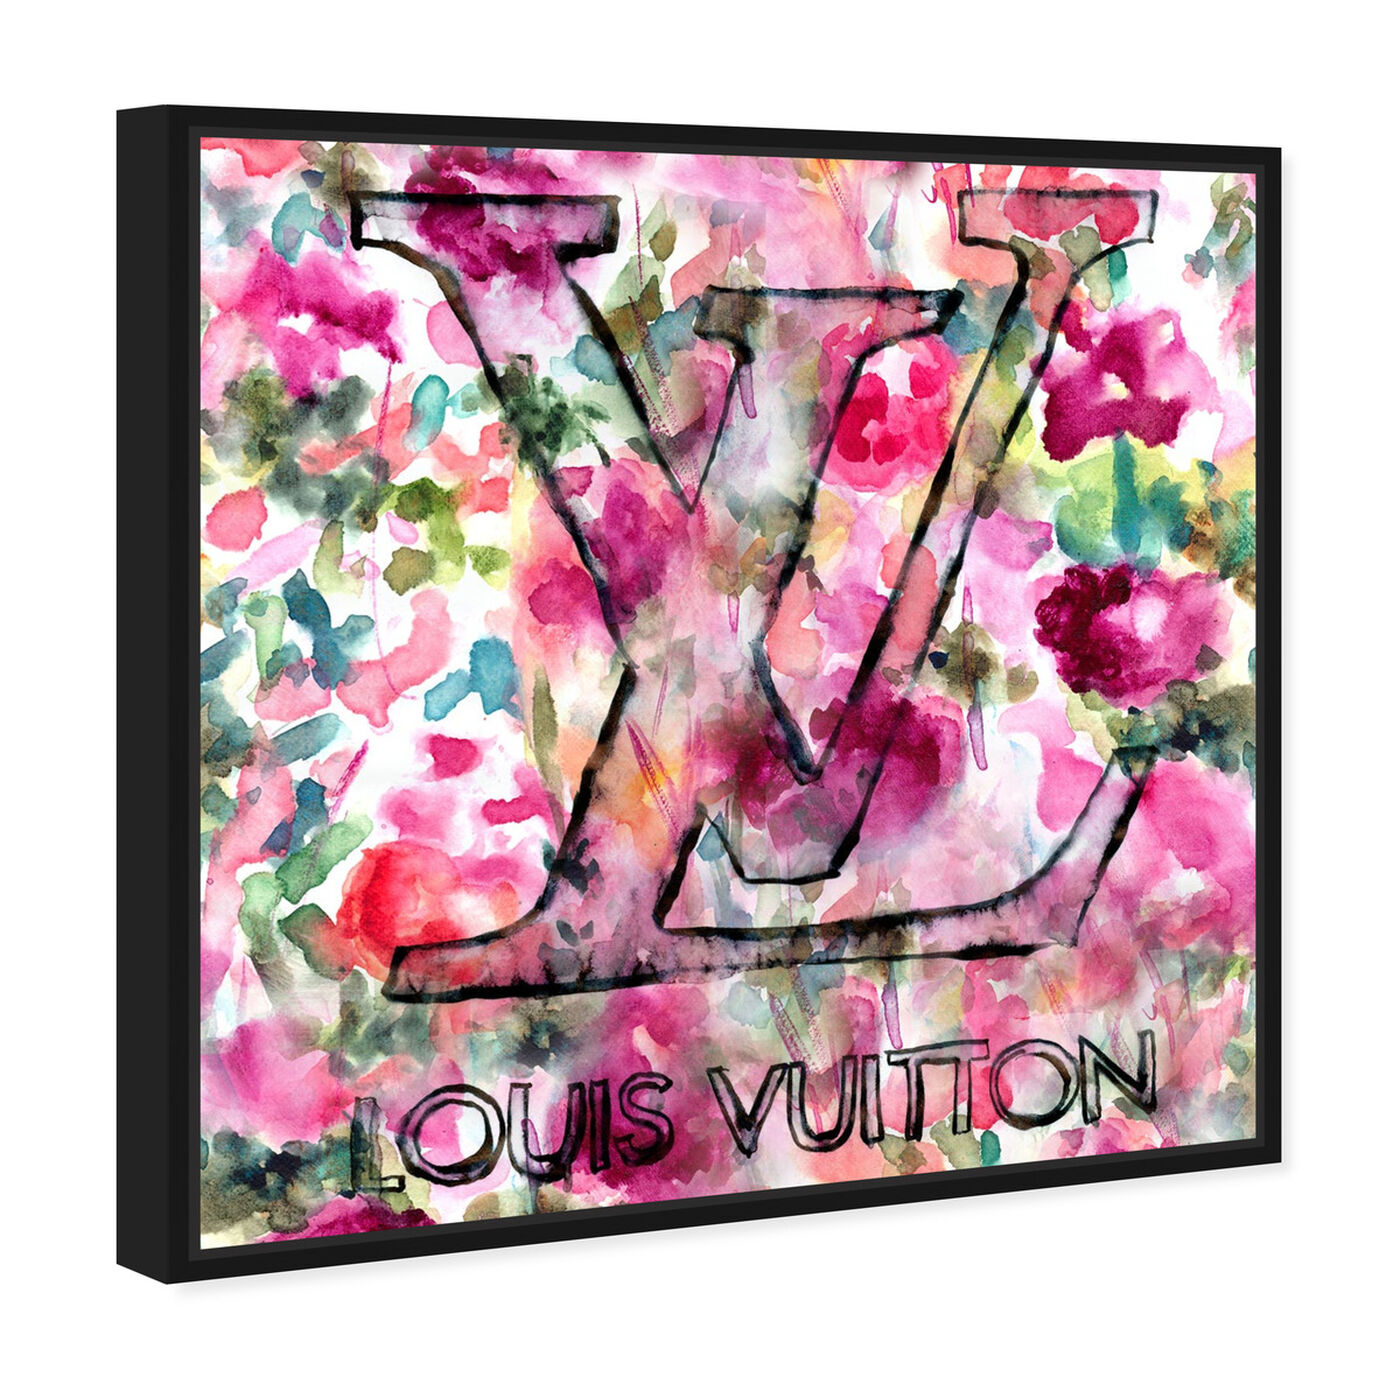 Louis Vuitton Canvas Wall Art